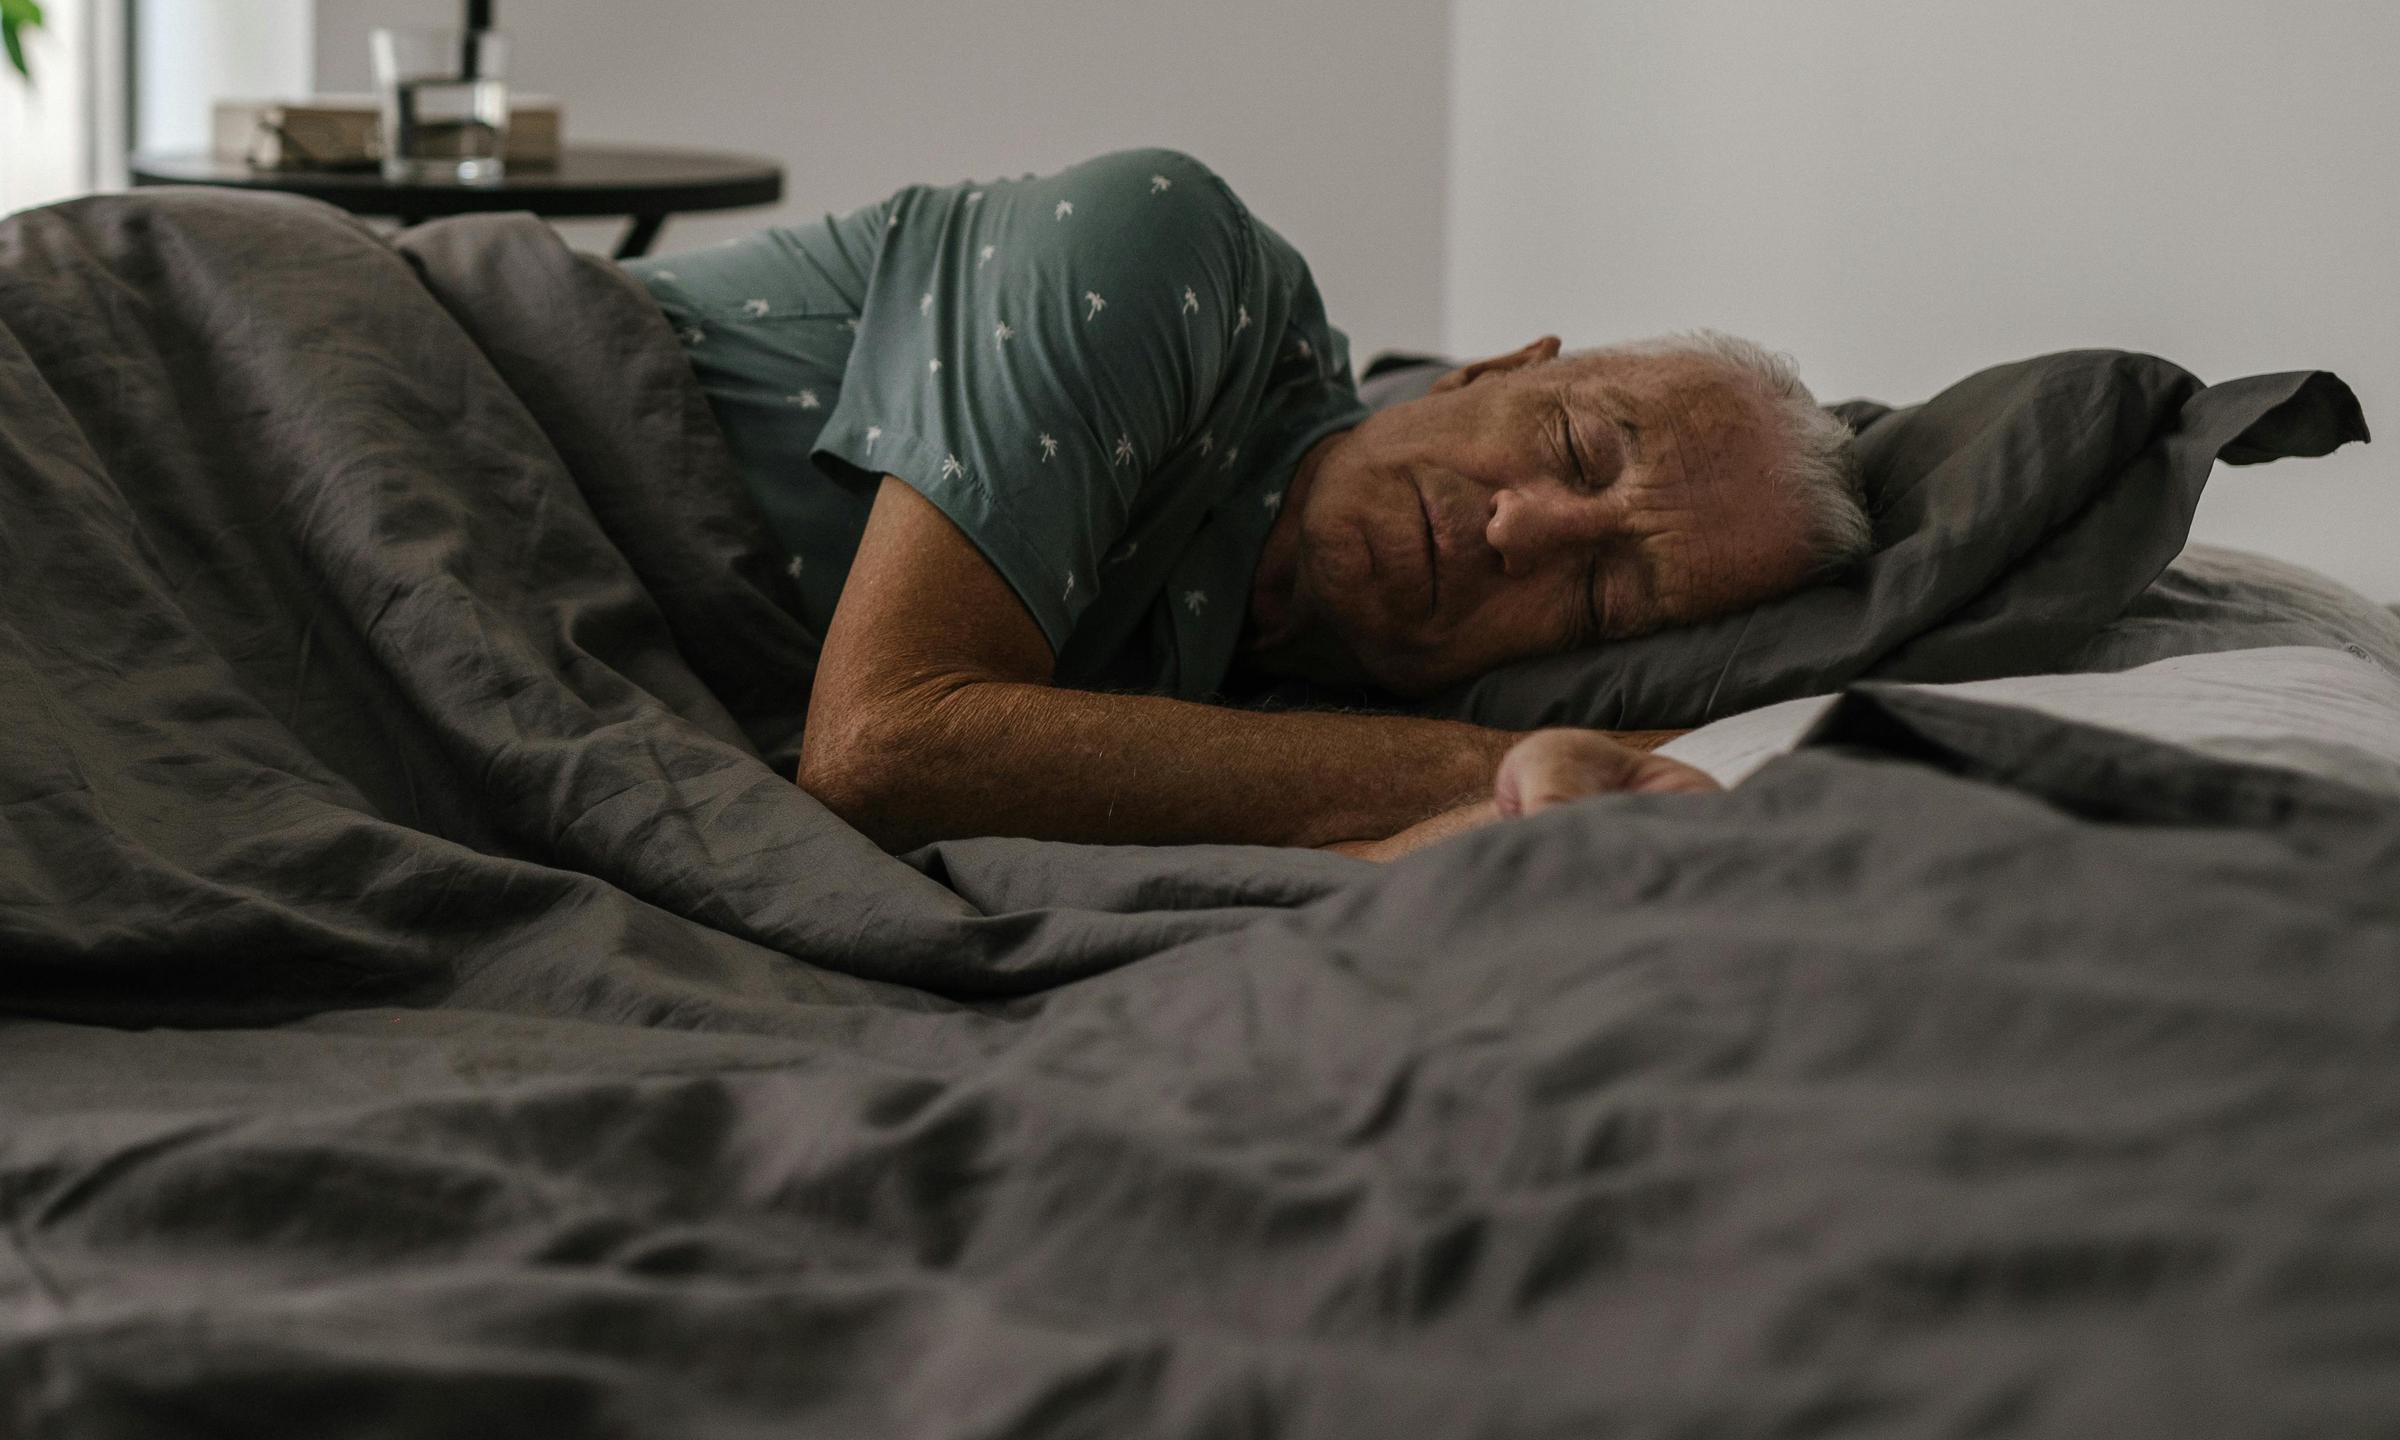 A sick-looking man lying in bed | Source: Pexels